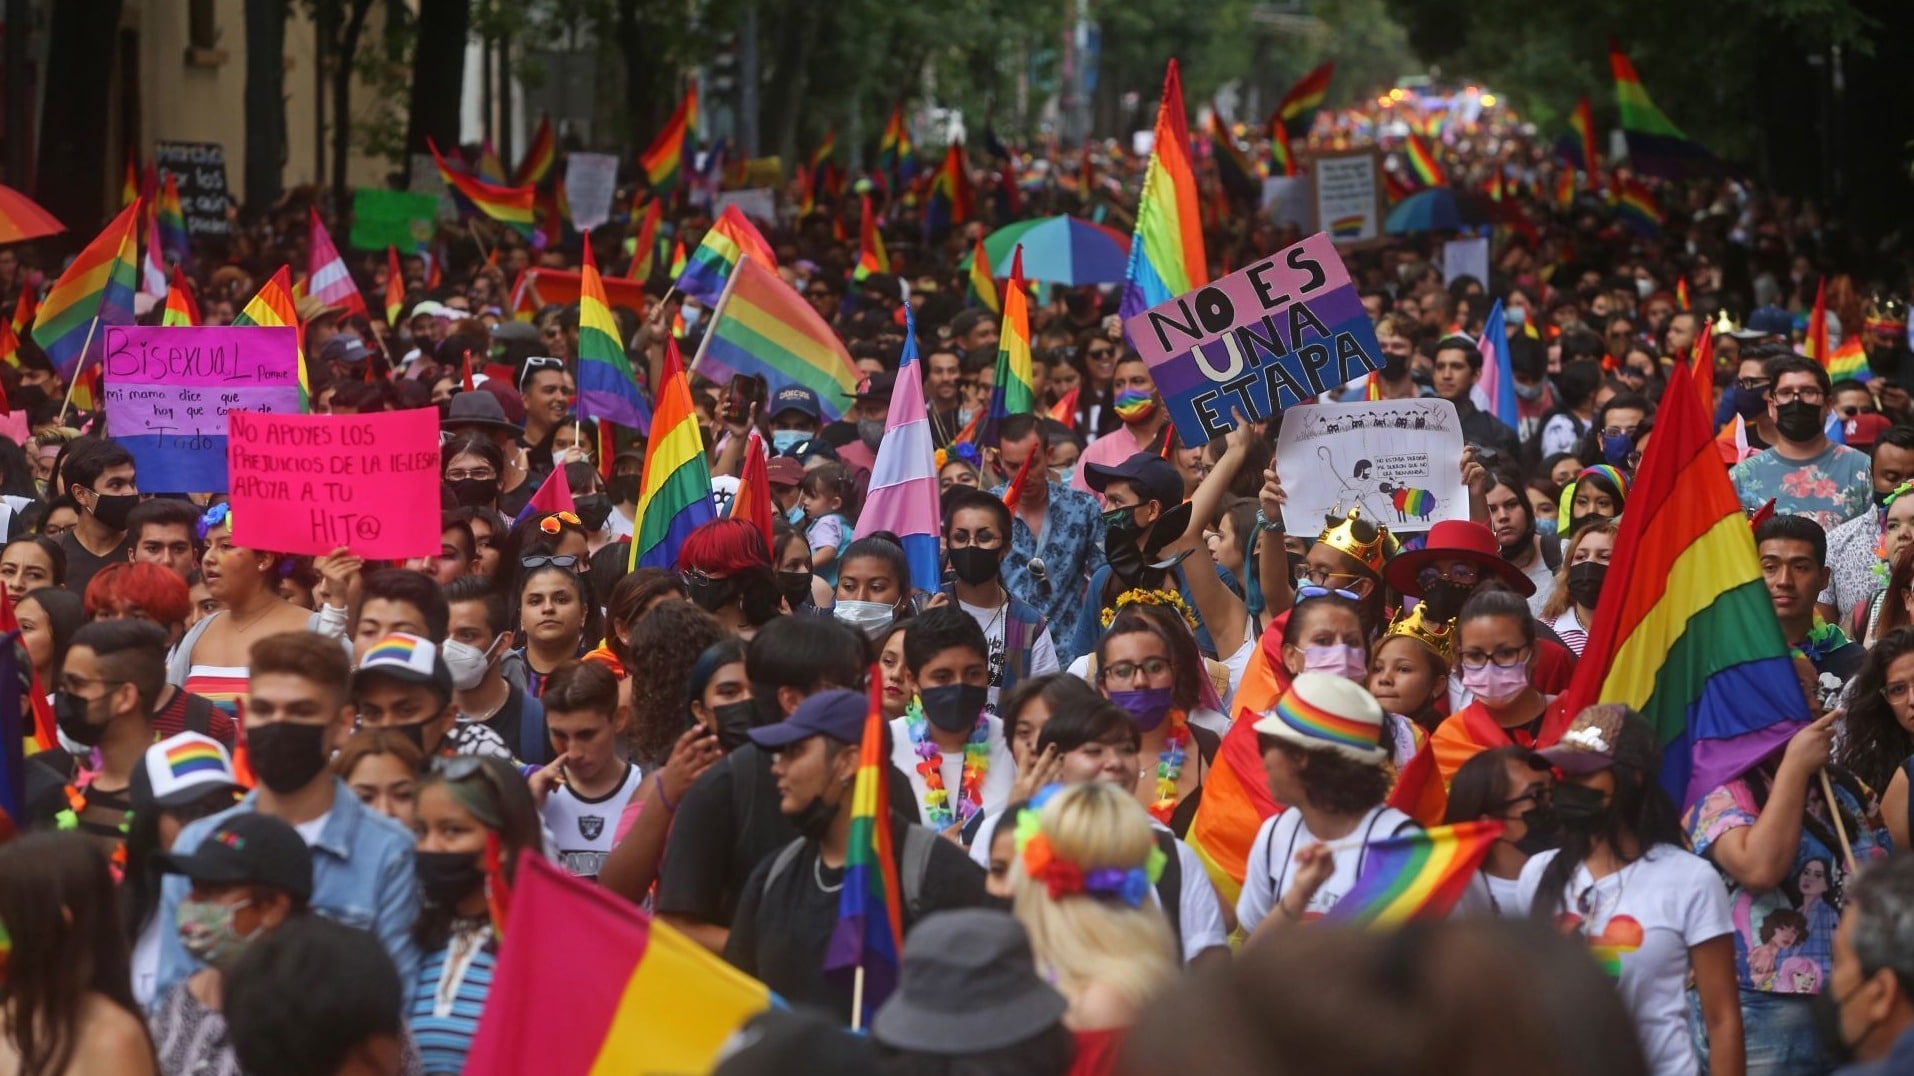 marcha del orgullo de la diversidad sexual volvera el 25 de junio a calles de cdmx